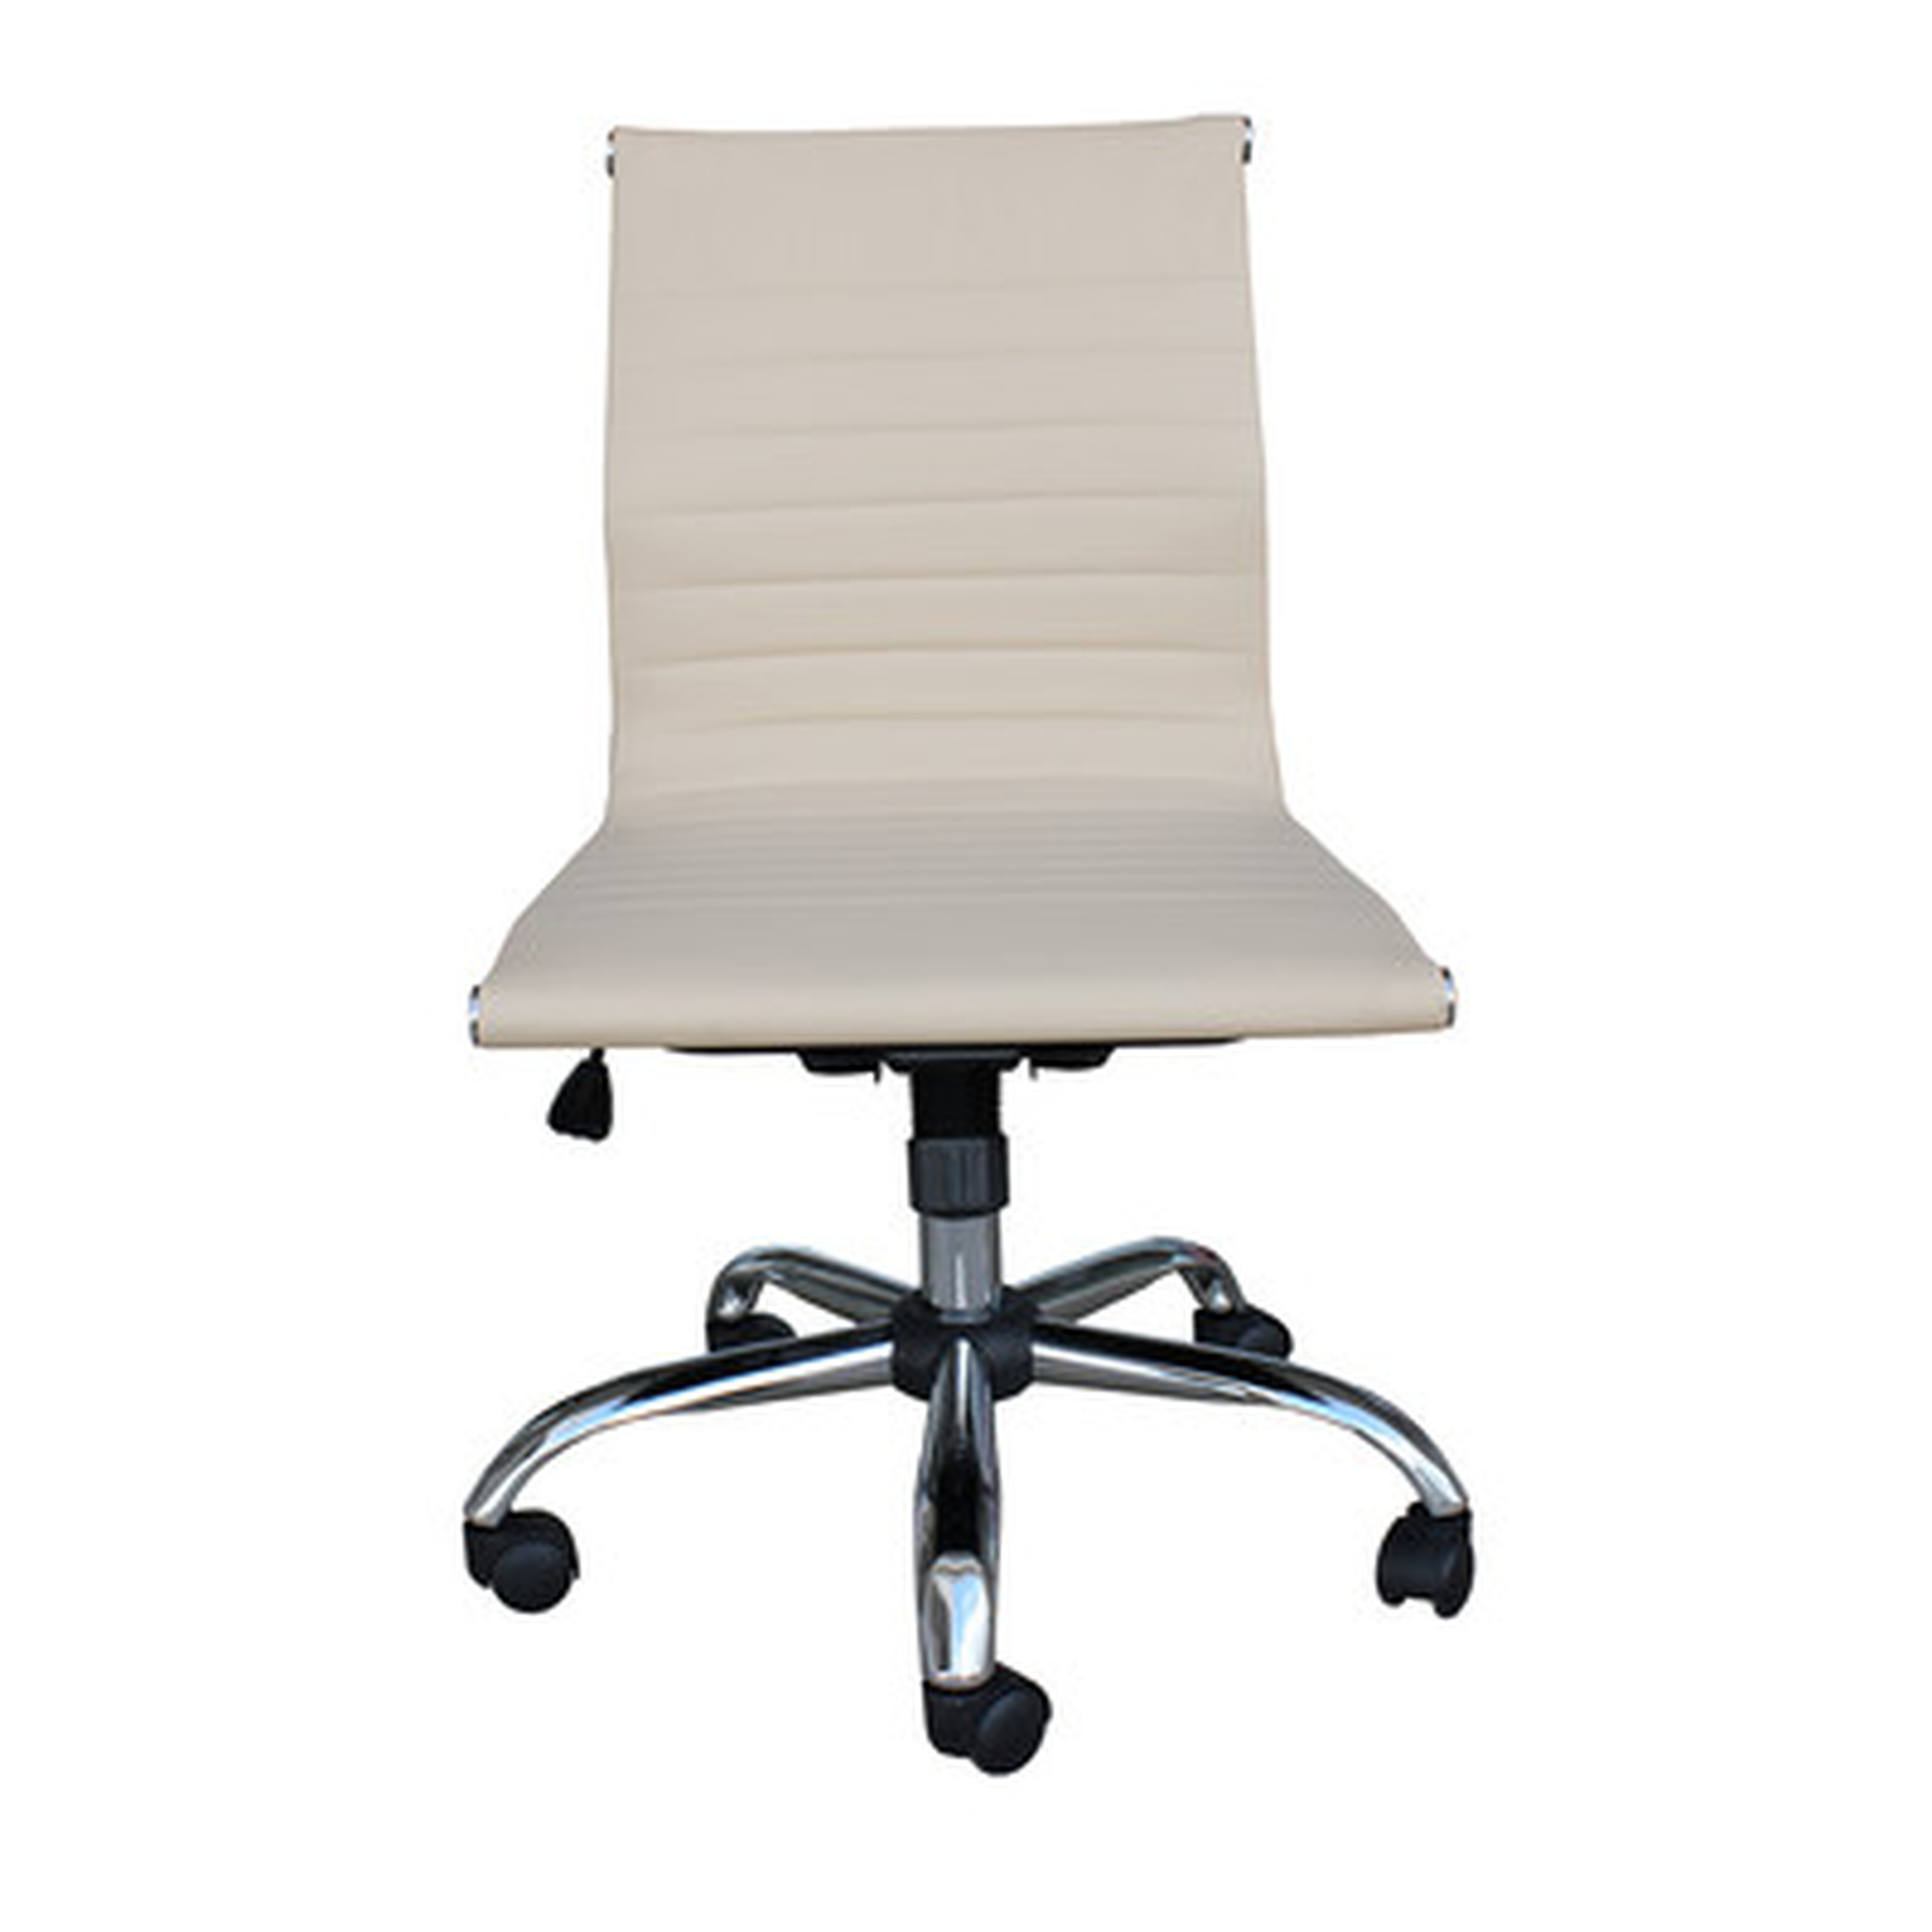 Desk Chair - Wayfair